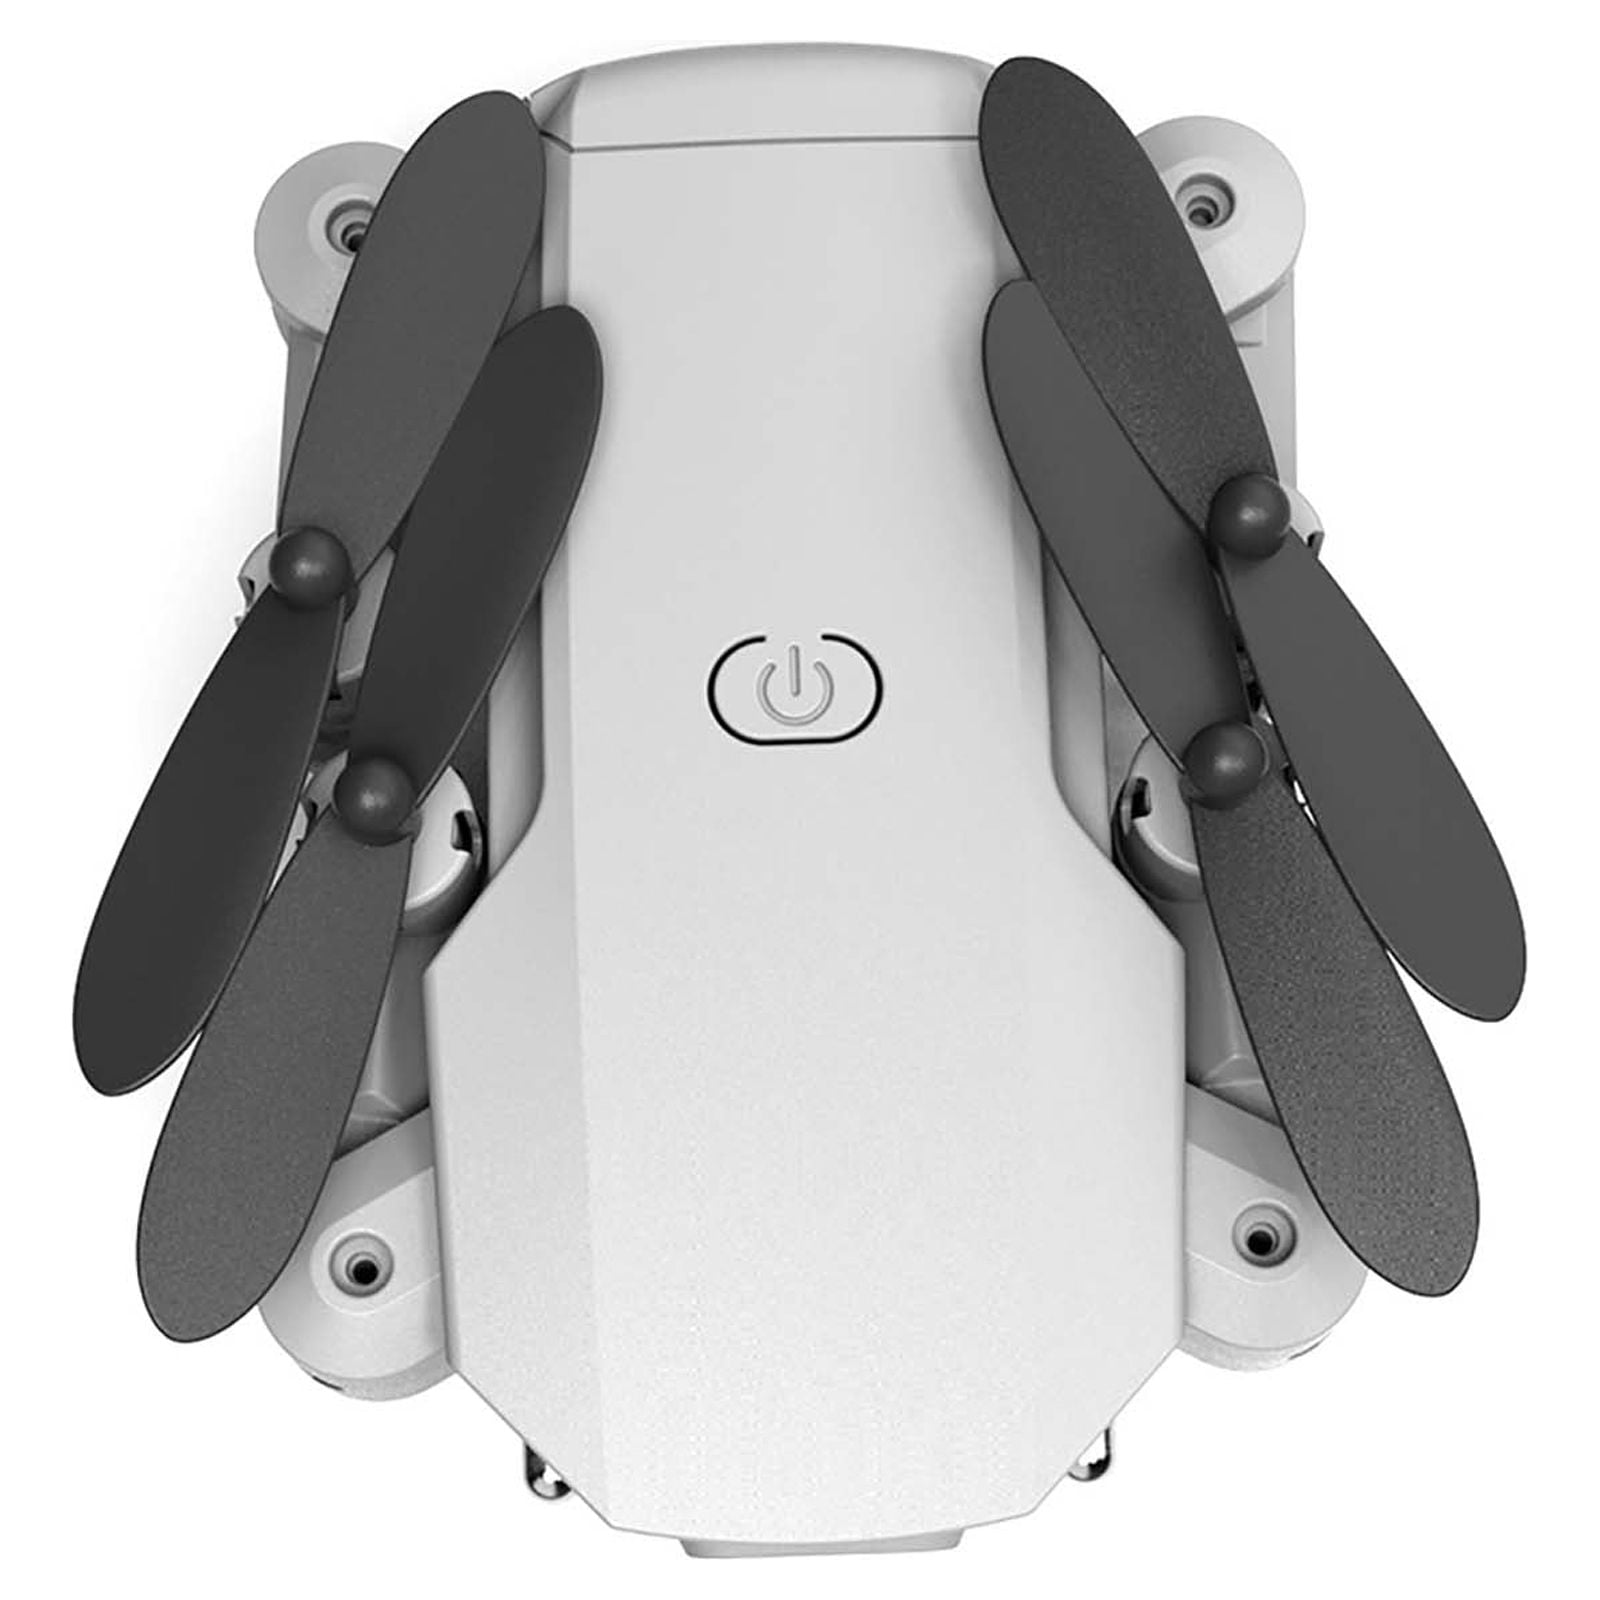 XIAOKEKE LS-MIN Mini Drone RC Quadcopter with 480P Camera 13Mins Fligh –  ToysCentral - Europe